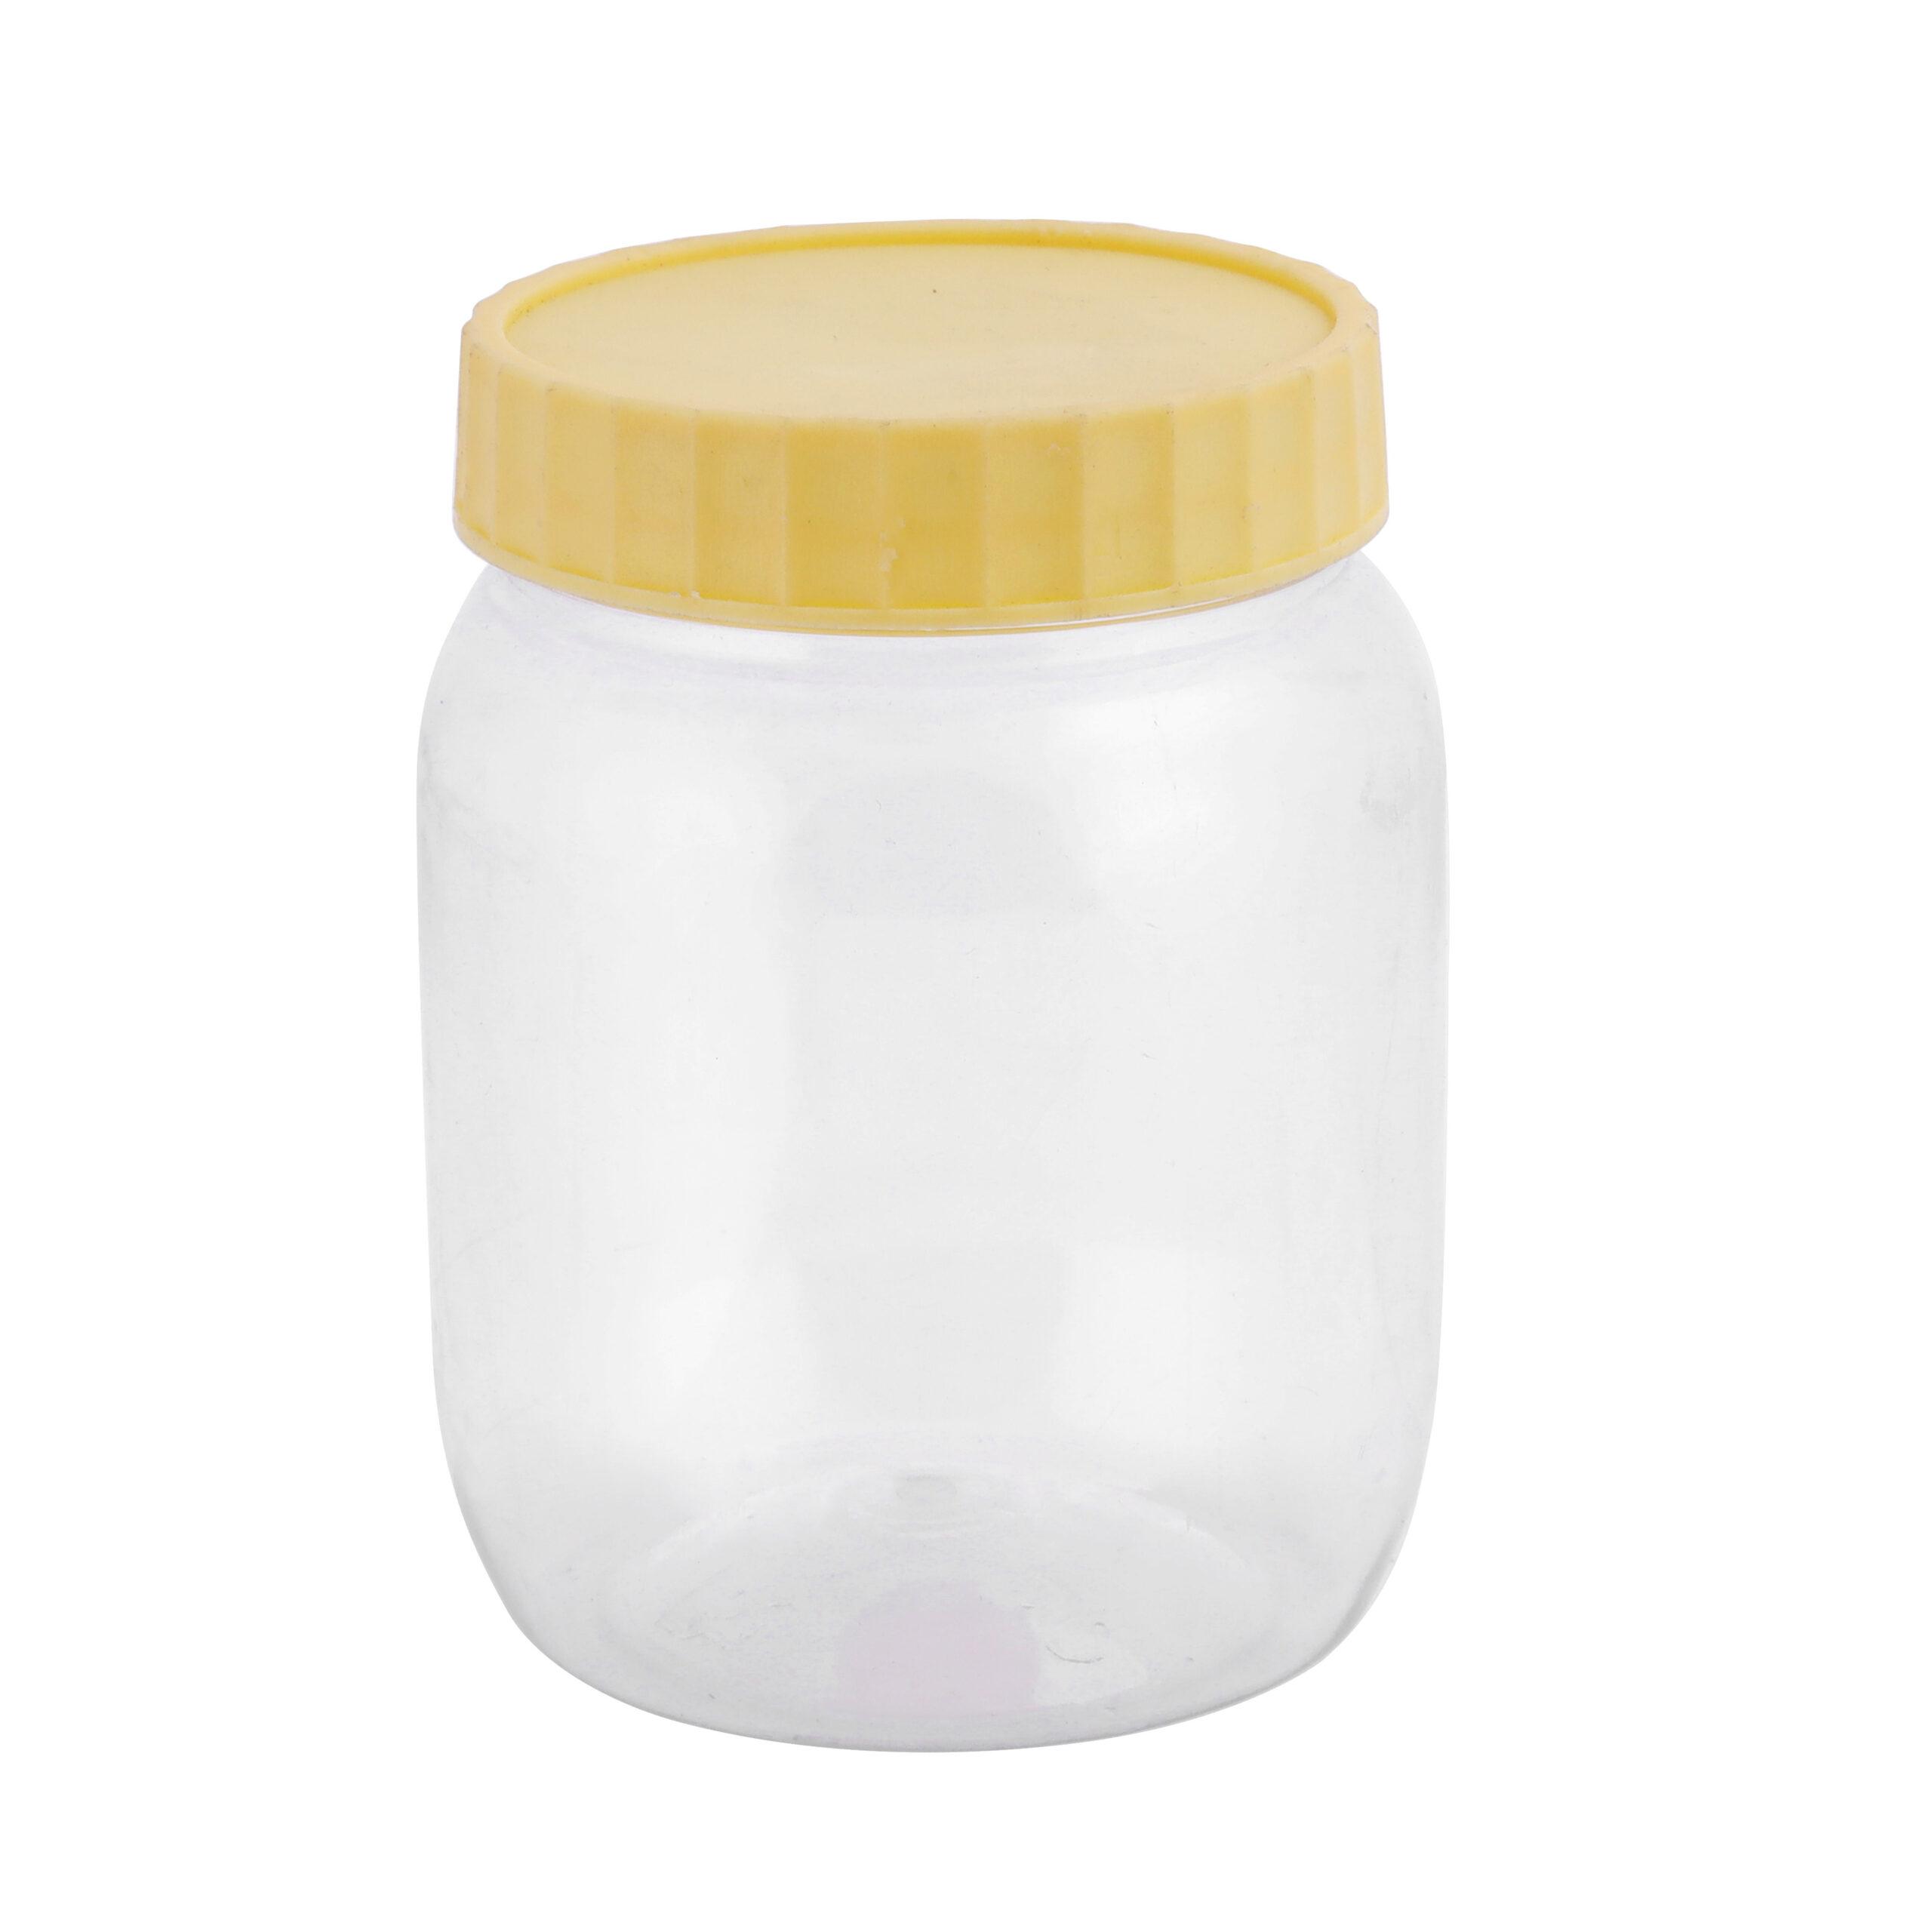 Delcasa 2000Ml Round Storage Jar - Air-Proof Transparent Jar - Healthier Choice, Maximum Freshness